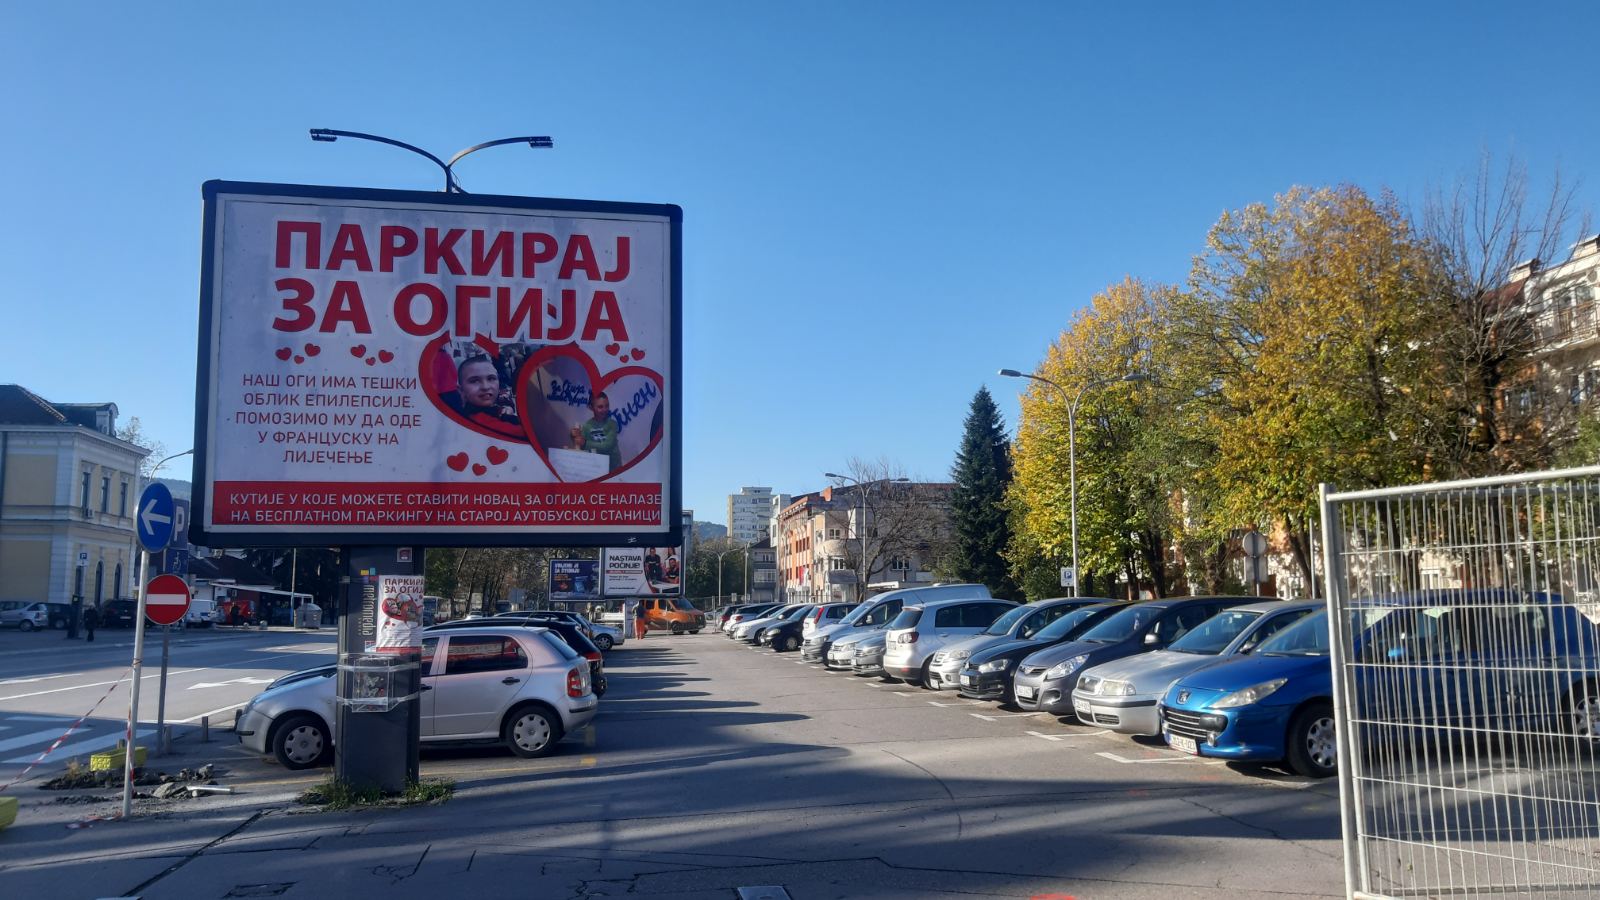 (FOTO) Banjalučani ljuti: Kako da parkiramo za Ogija, kad ste sve pregradili? Autoprevoz: Malo strpljenja!